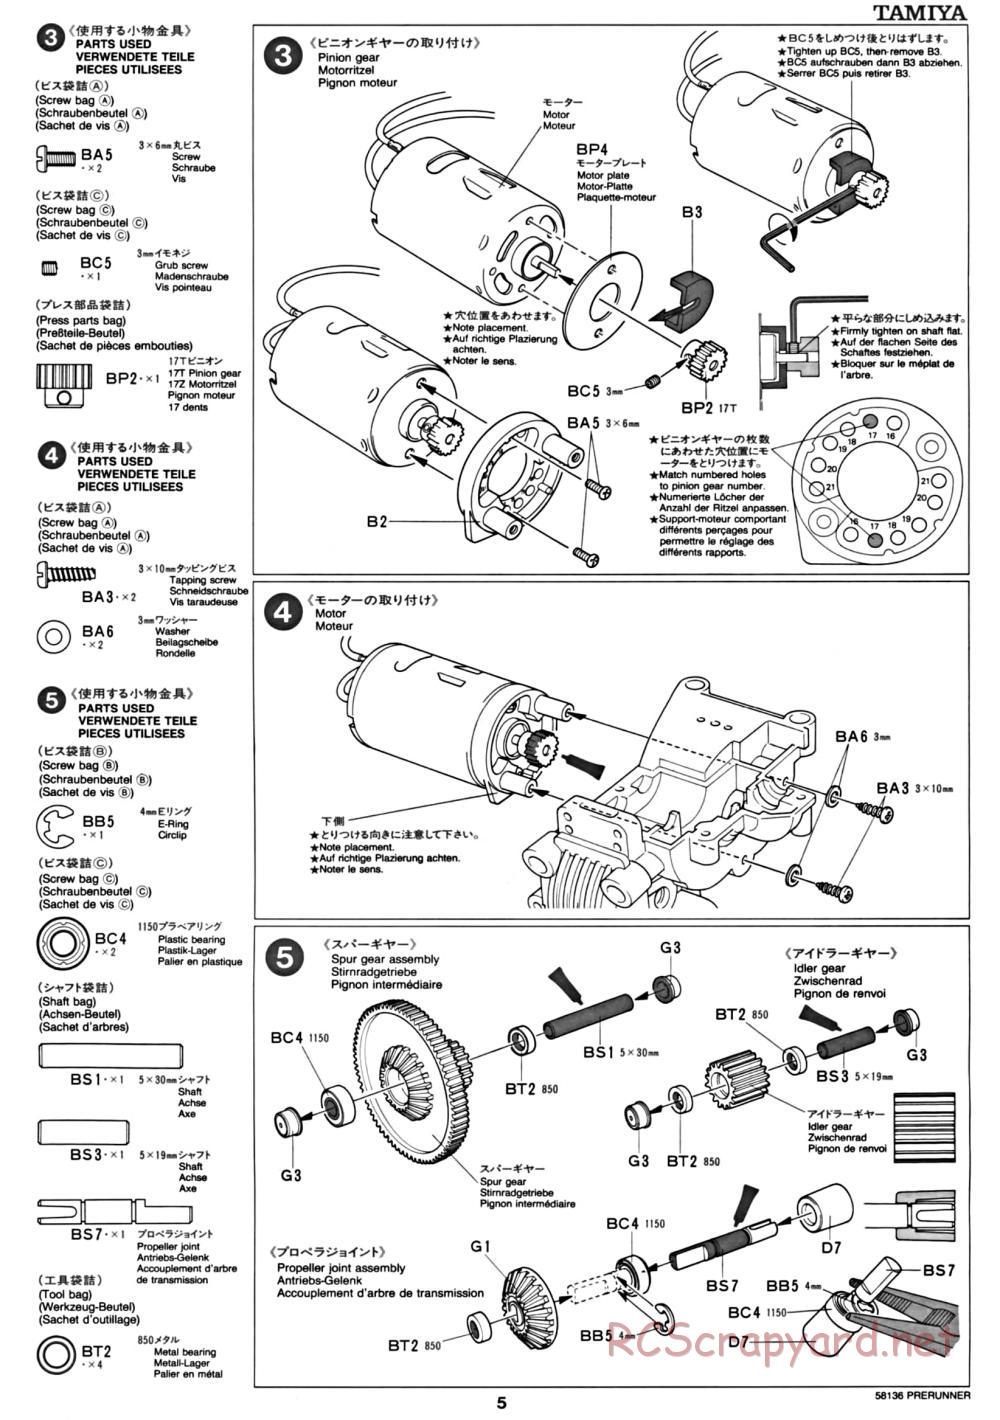 Tamiya - Toyota Prerunner Chassis - Manual - Page 5